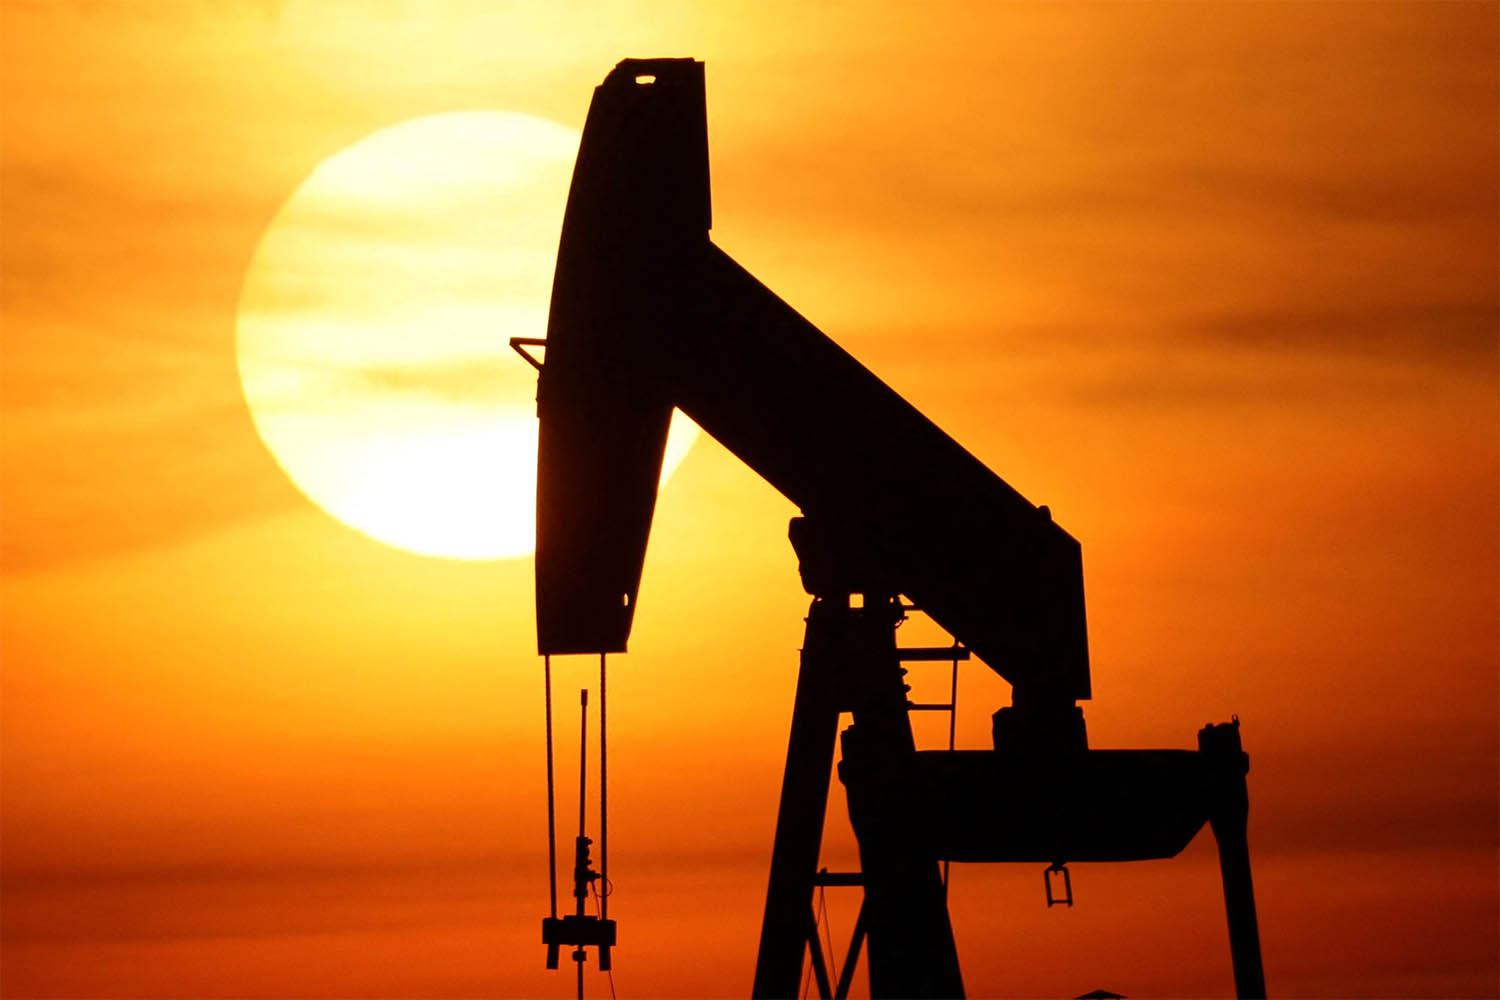 IEA members hold emergency stockpiles of 1.5 billion barrels